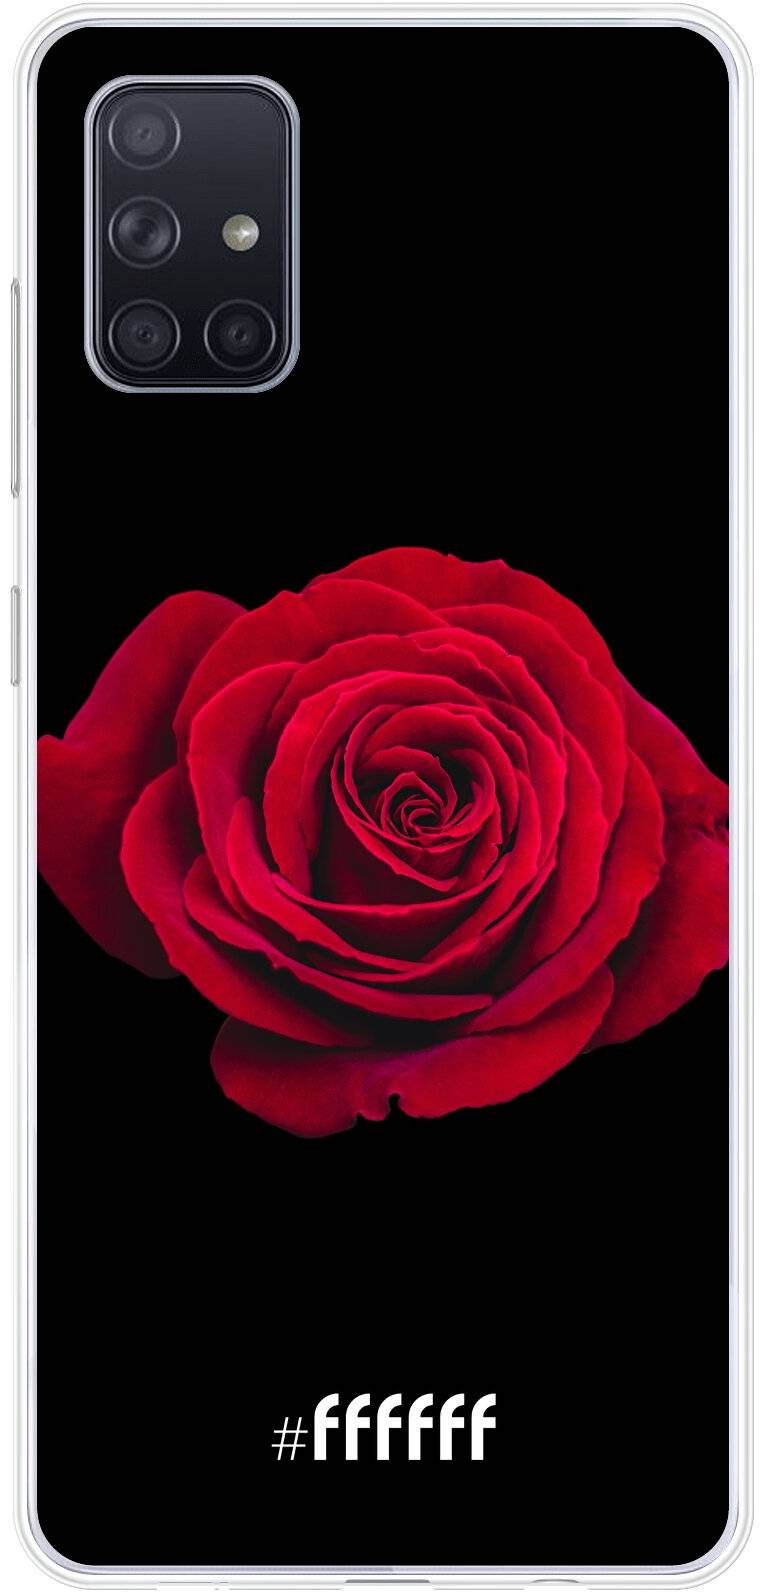 Radiant Rose Galaxy A71